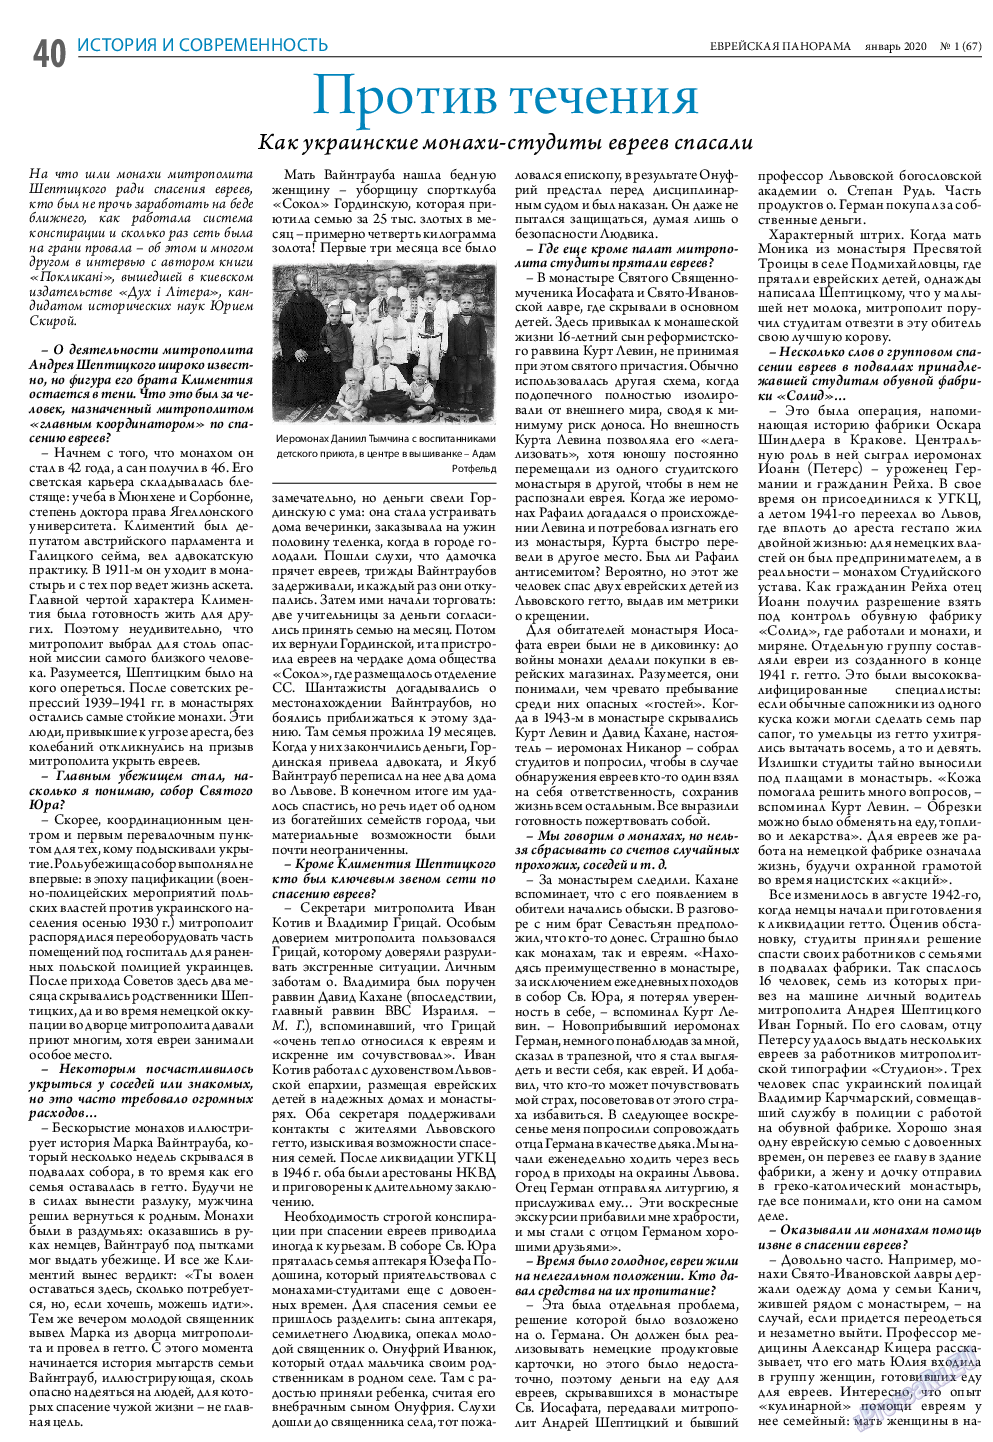 Еврейская панорама, газета. 2020 №1 стр.40